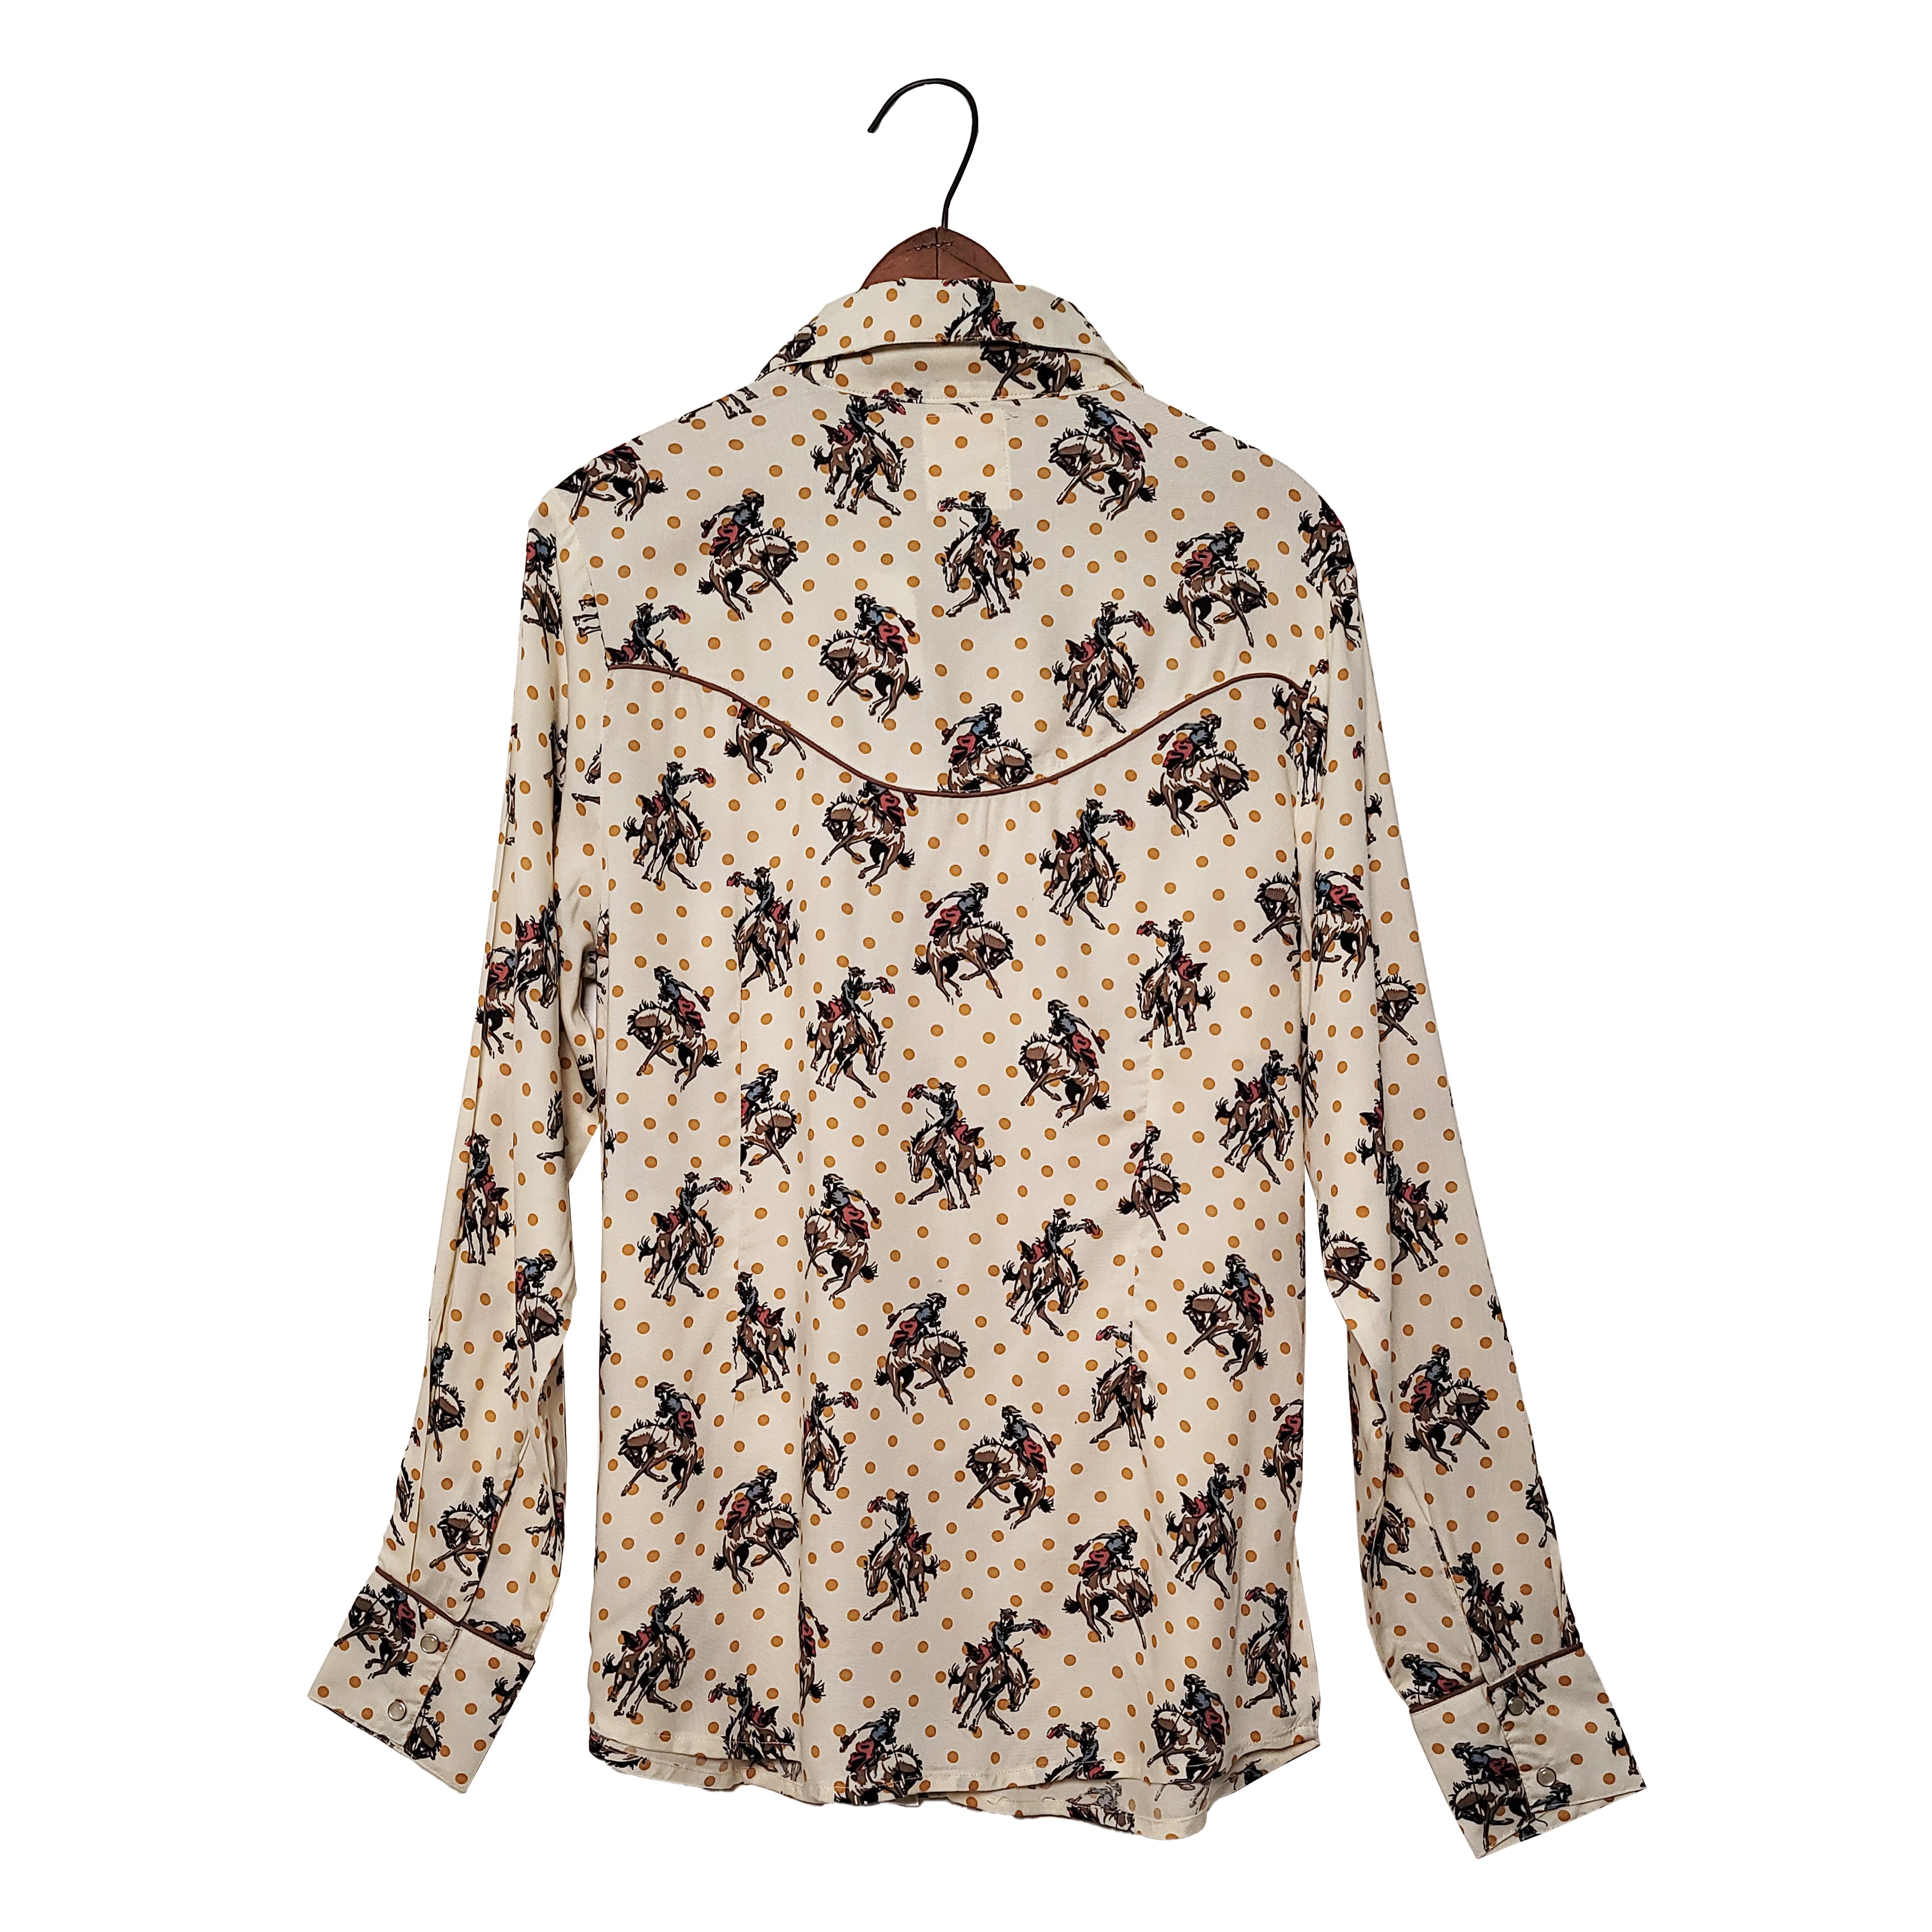 Buckaroo Betty Snap Long Sleeve Shirt by Cotton & Rye #CRW111M